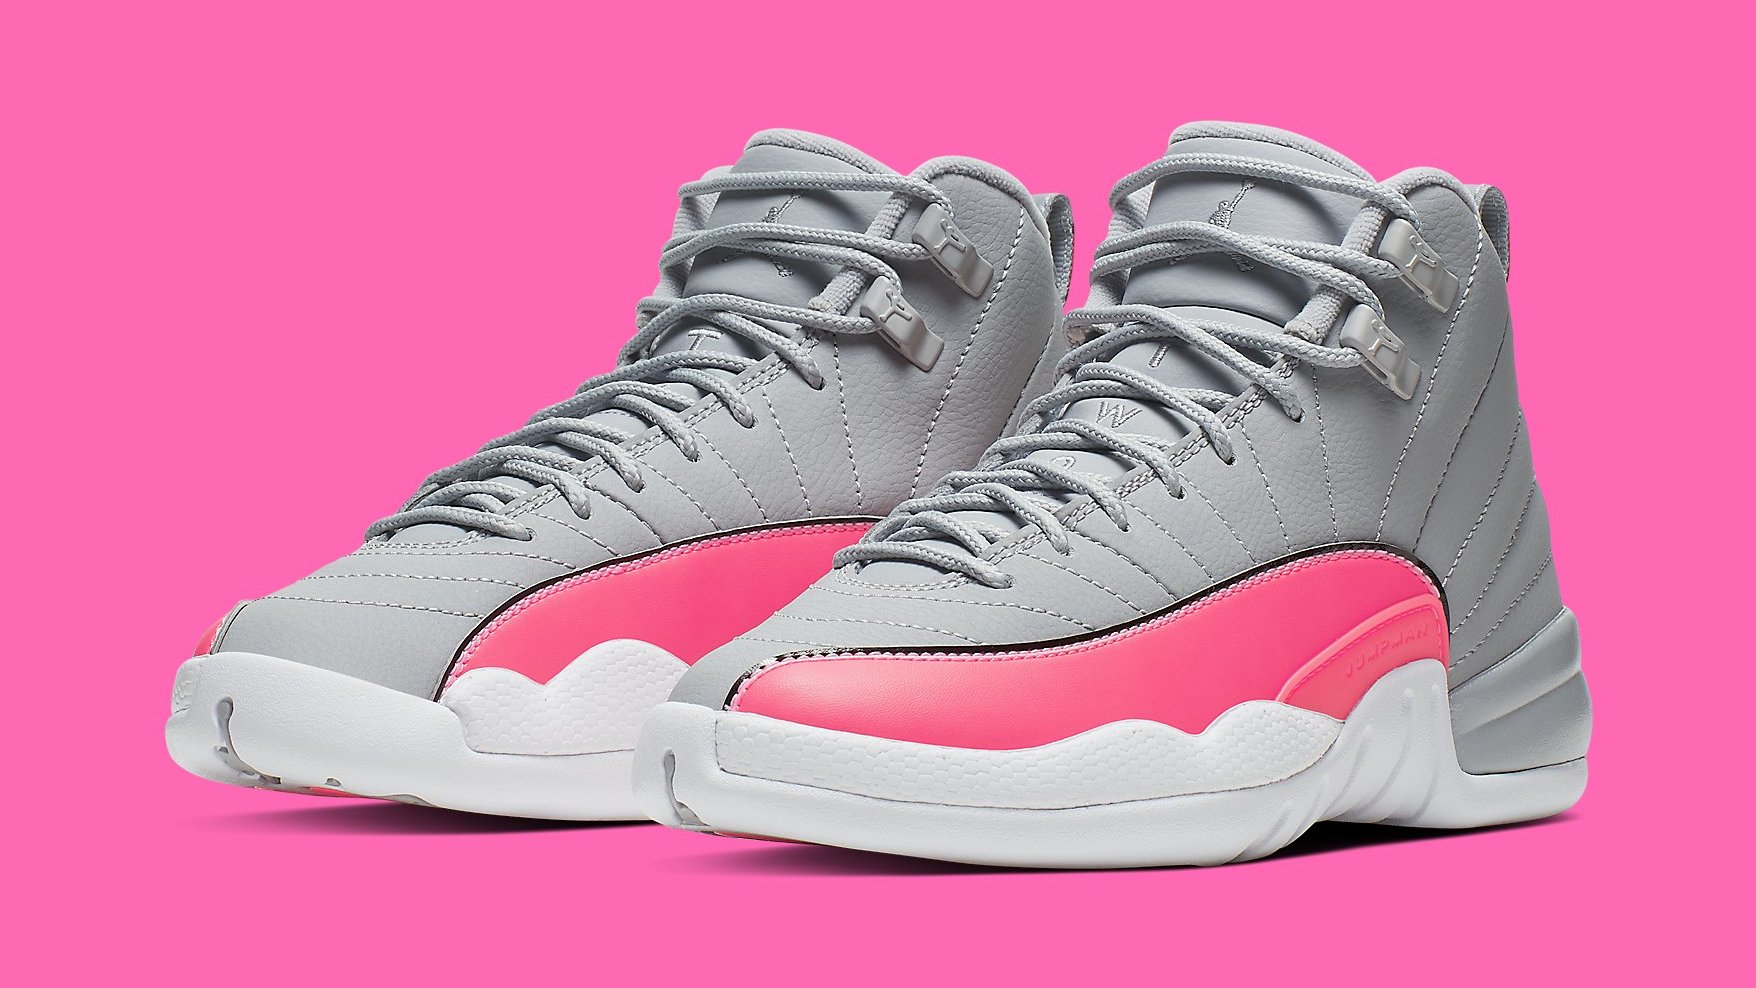 gray and pink jordan 12s